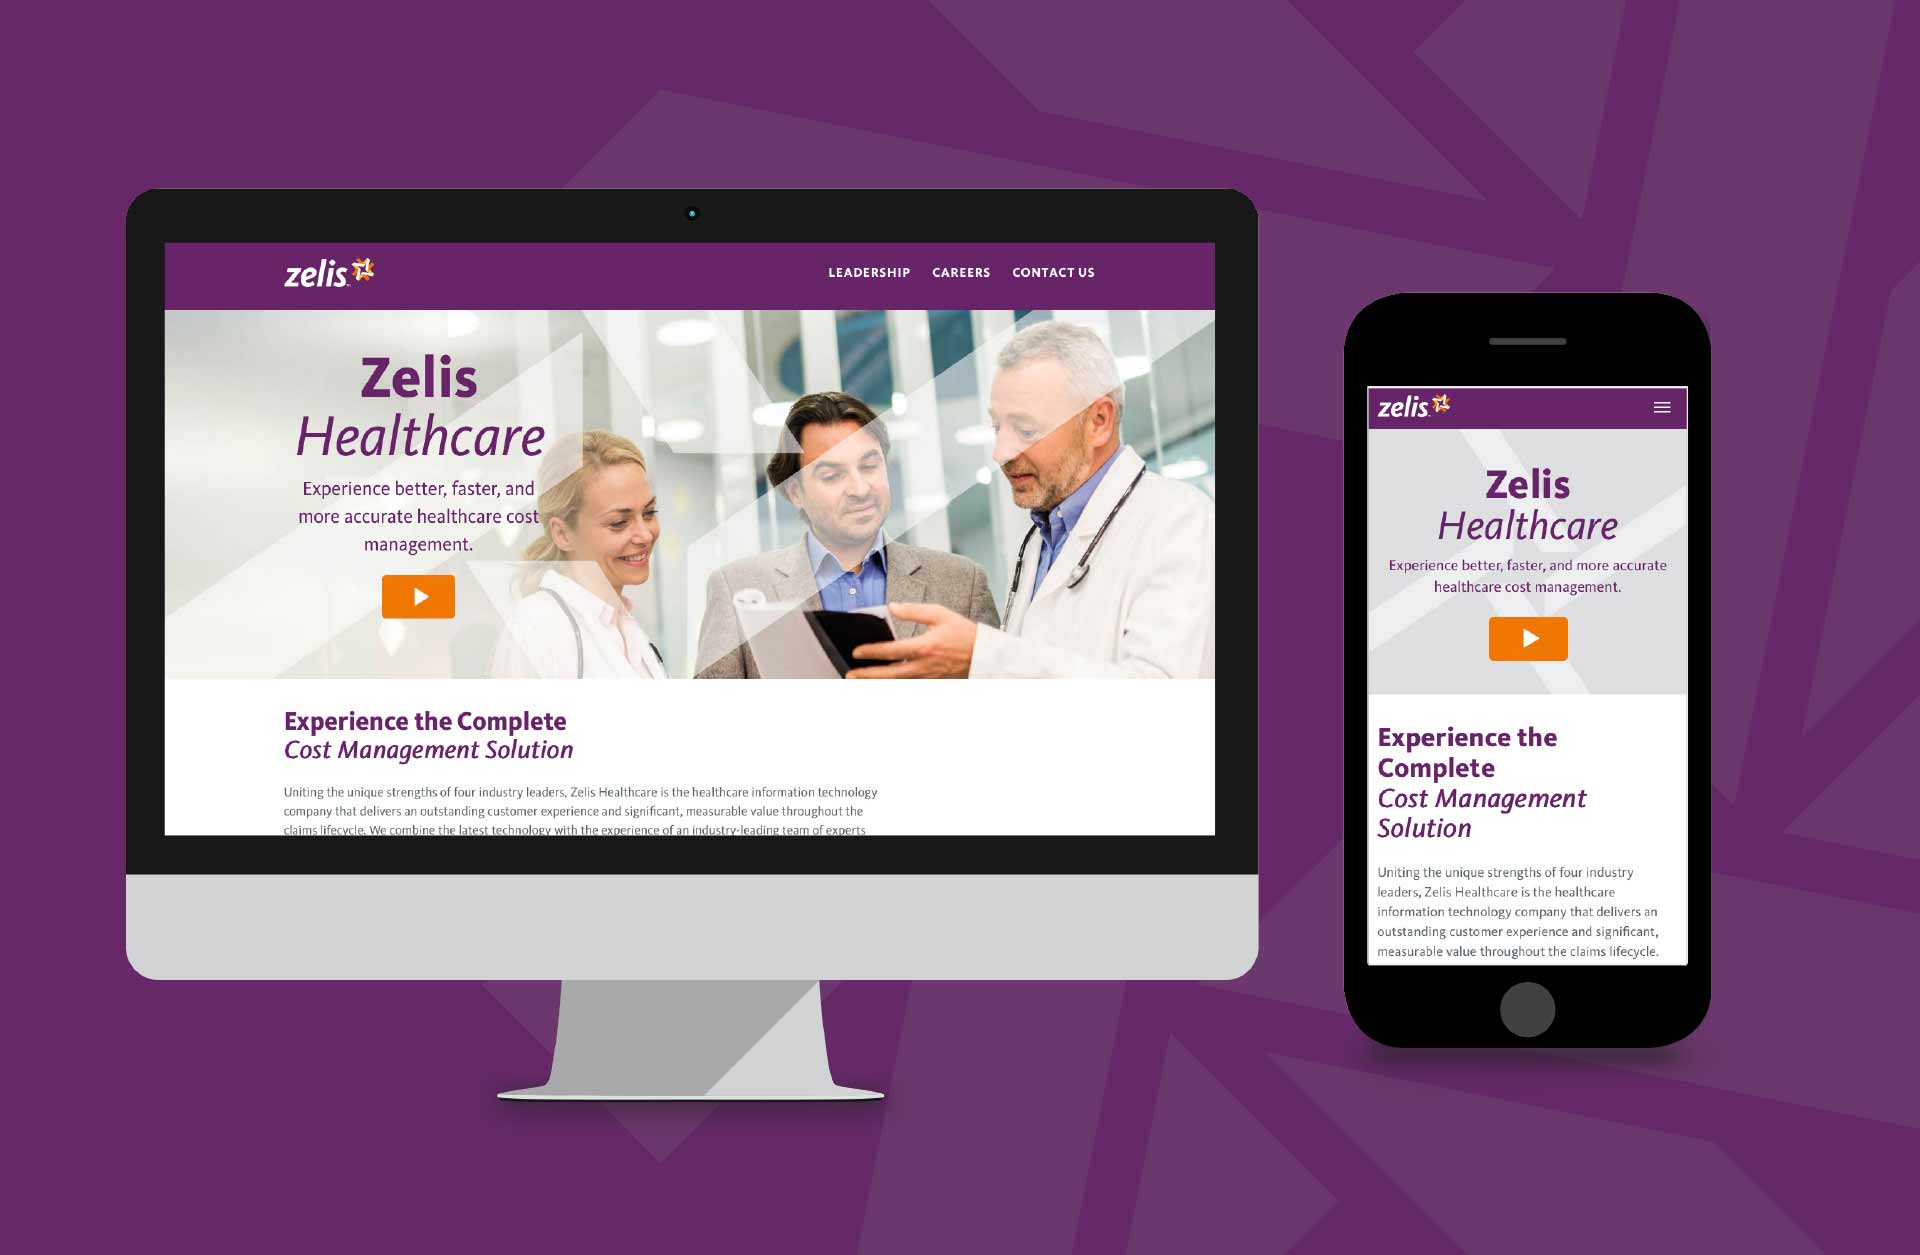 Zelis desktop and mobile web page